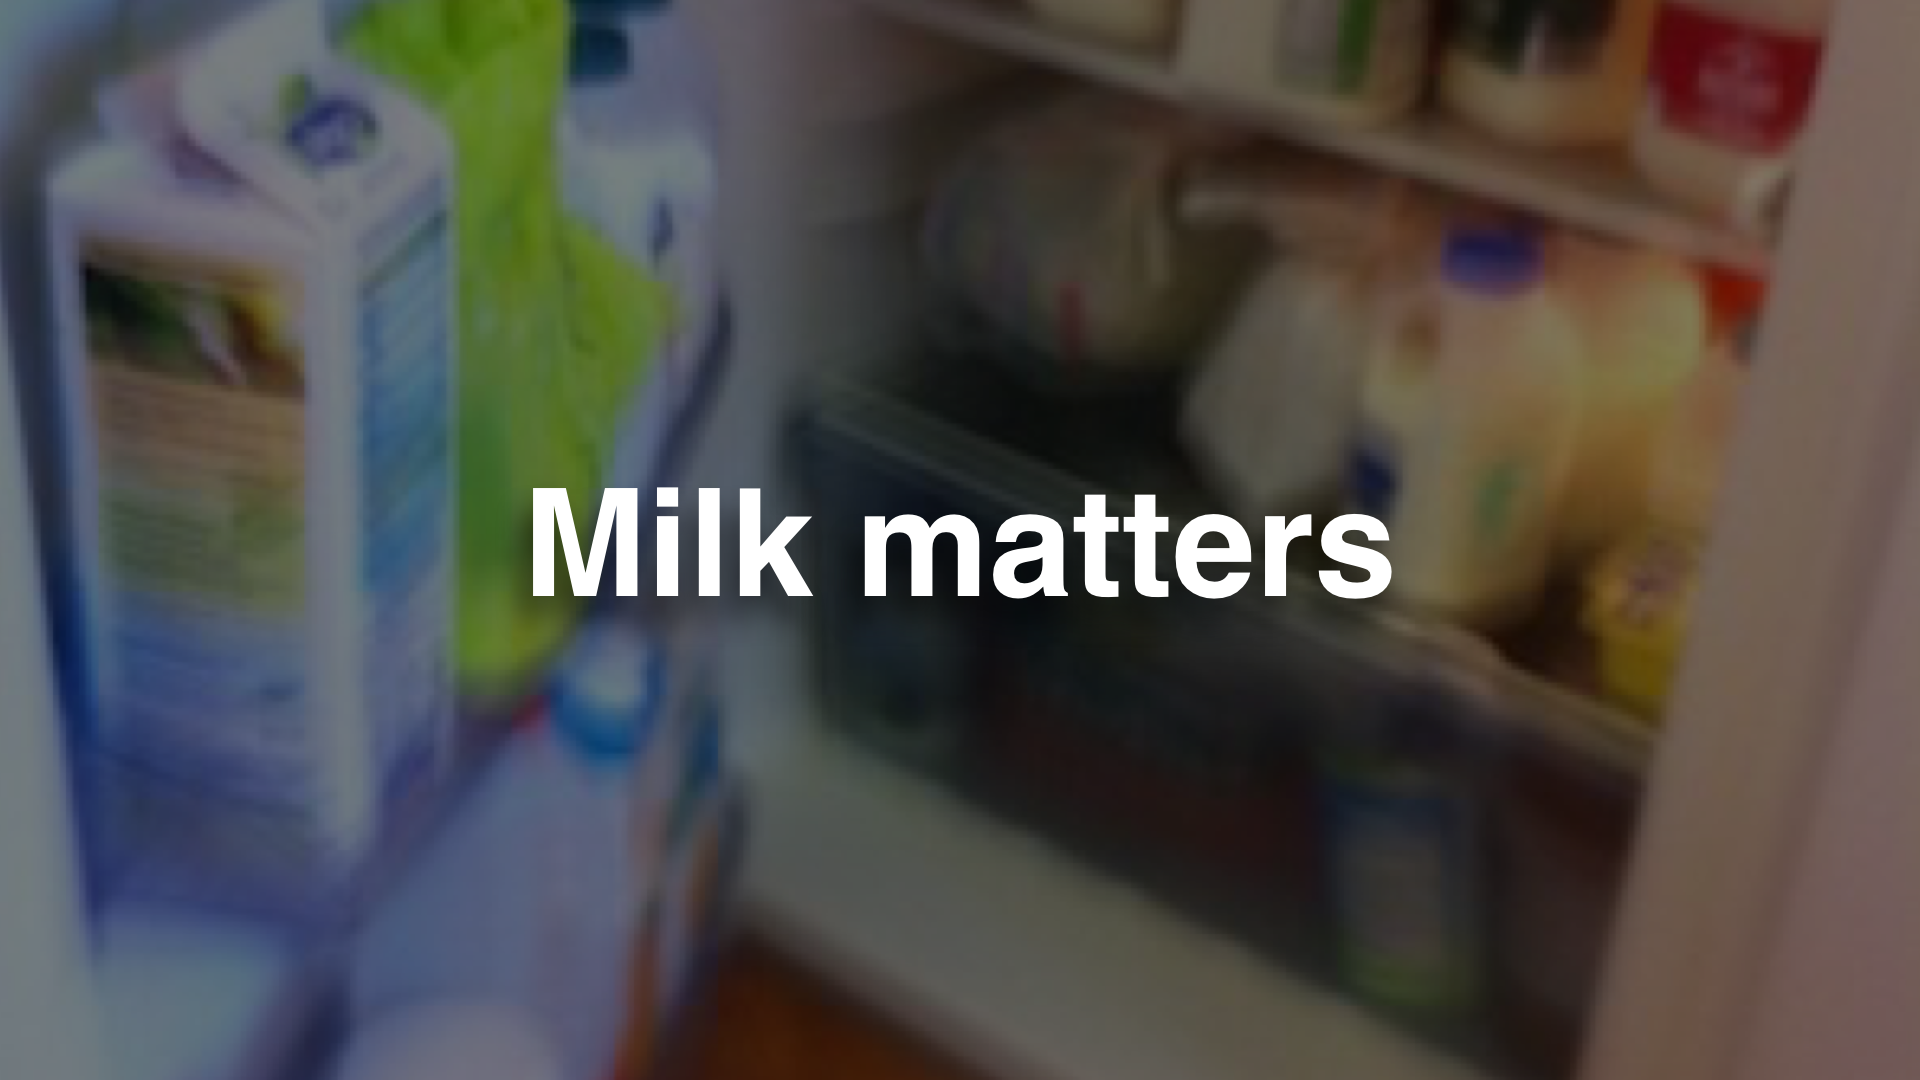 "Milk matters"